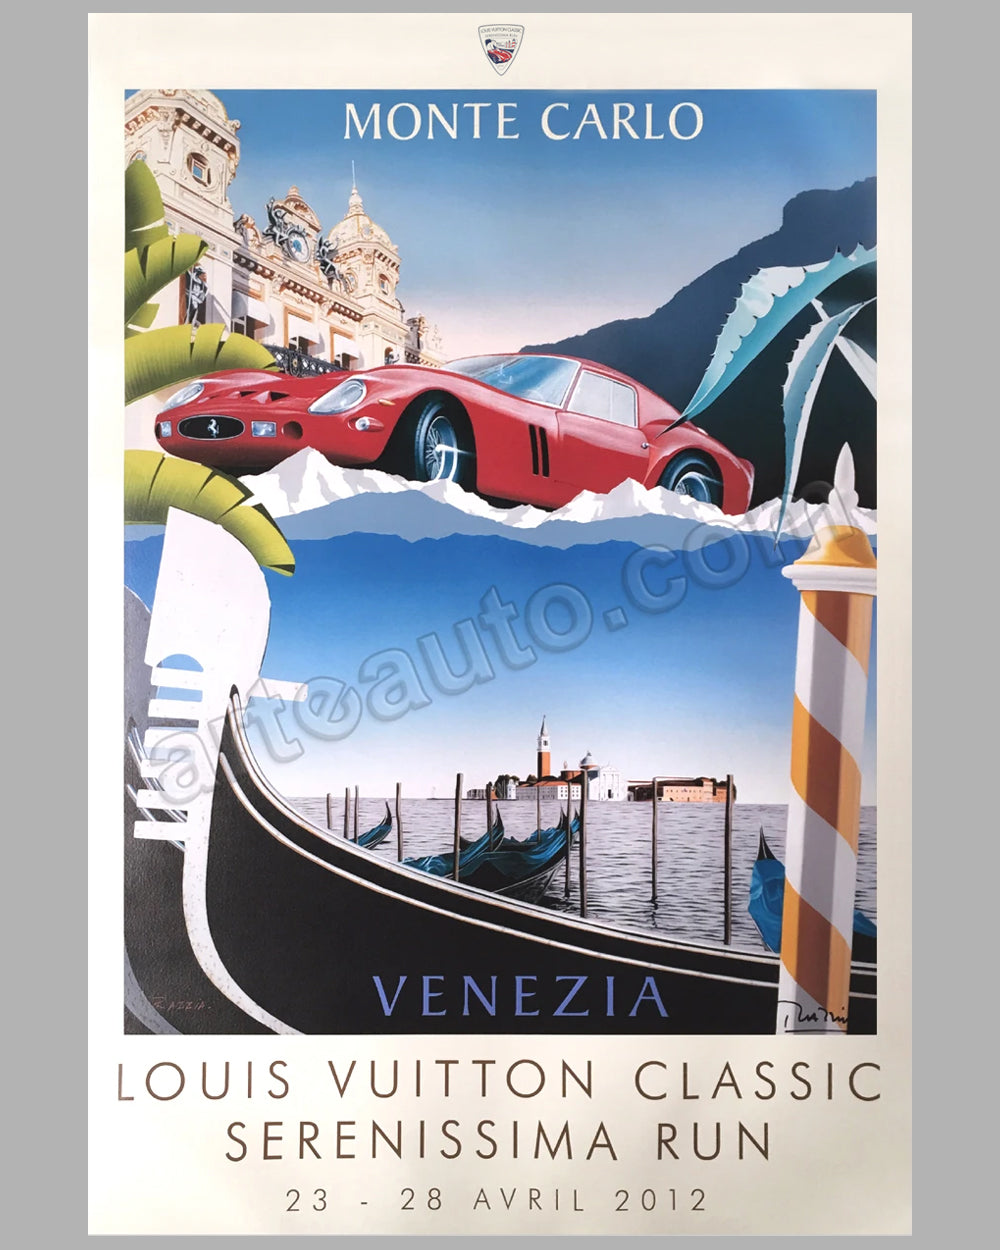 Louis Vuitton Classic Serenissima Run 2012 original poster by